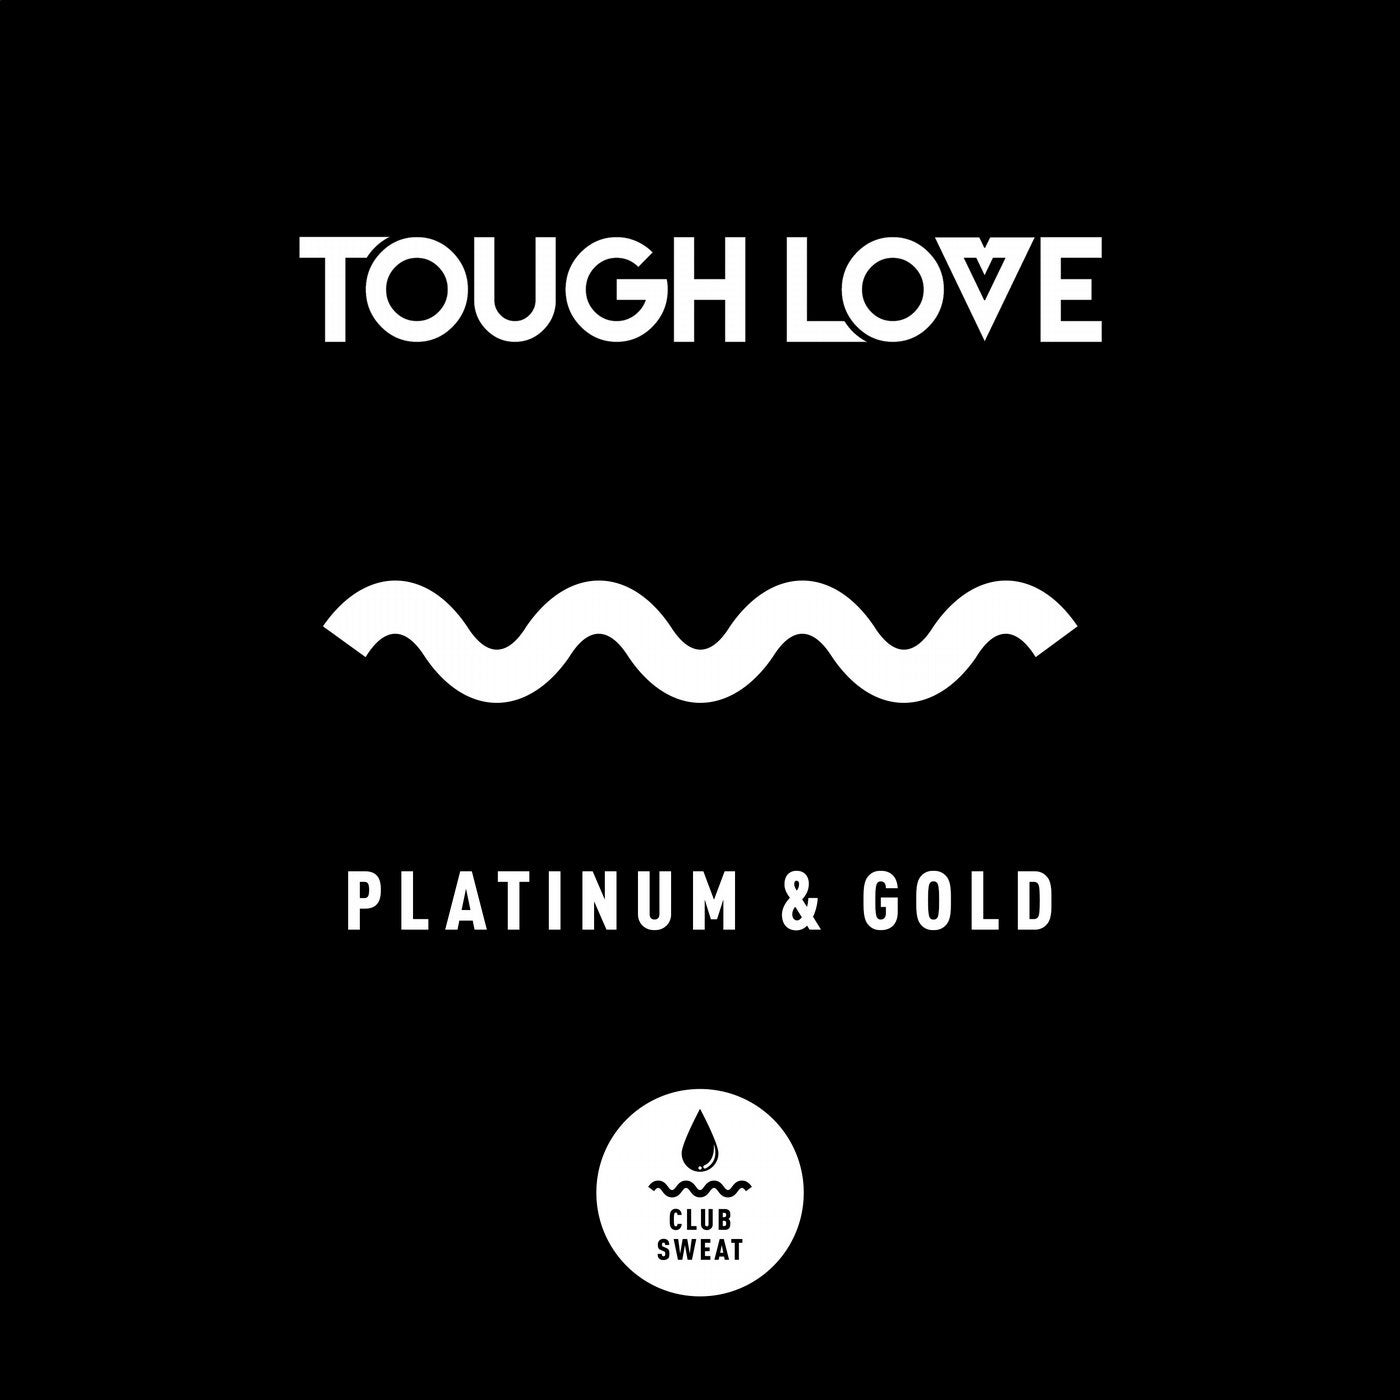 Platinum & Gold (Extended Mix)